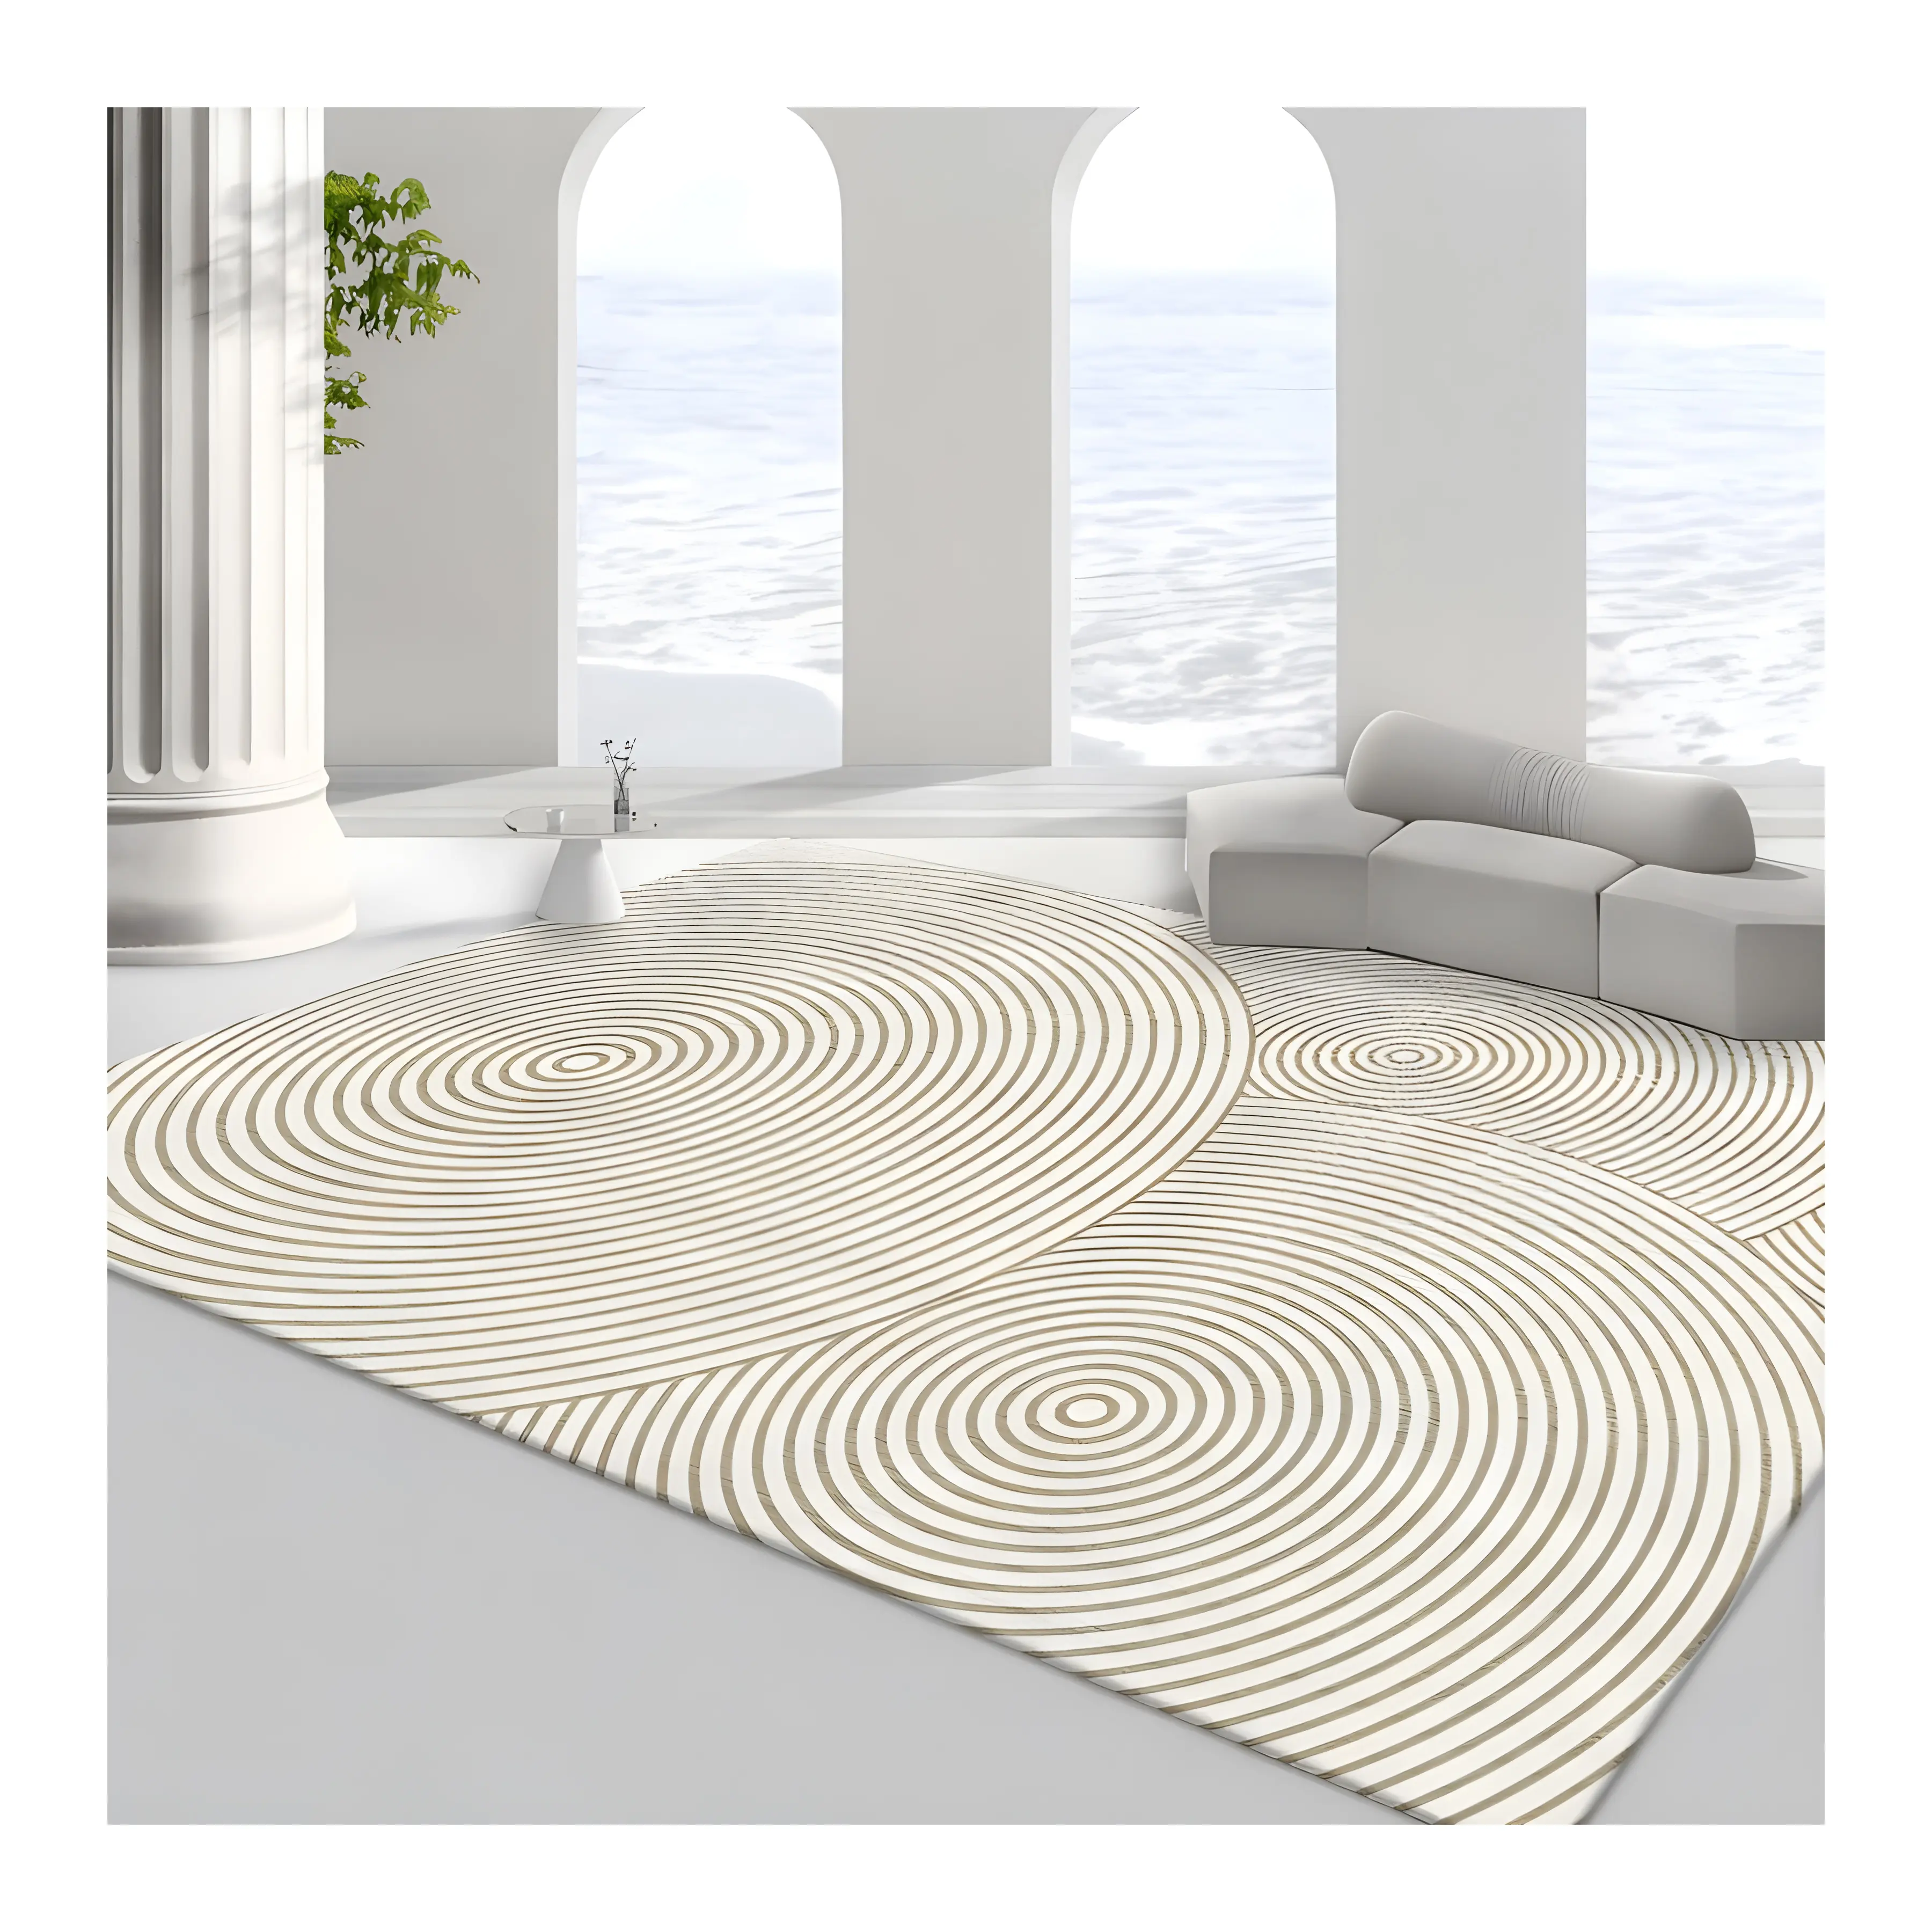 Living room carpet fully covered, light luxury and minimalist, Nordic bedroom modern and minimalist carpet